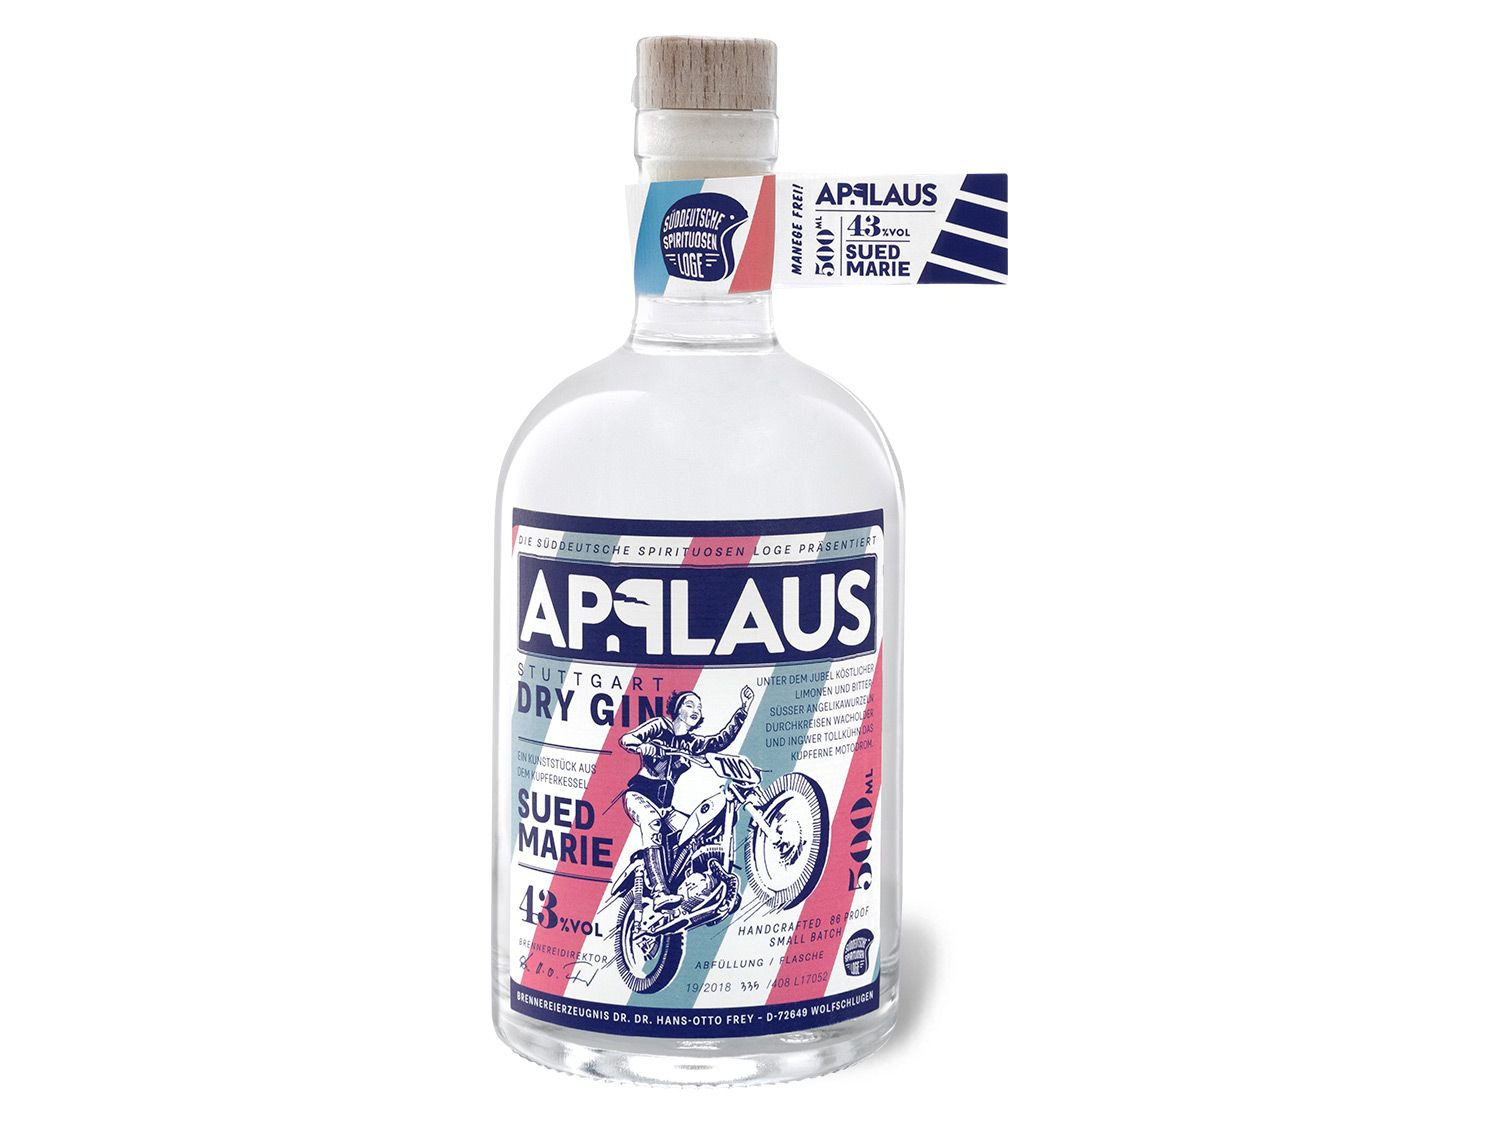 Applaus Dry Gin Suedmarie LIDL 43% | online Vol kaufen